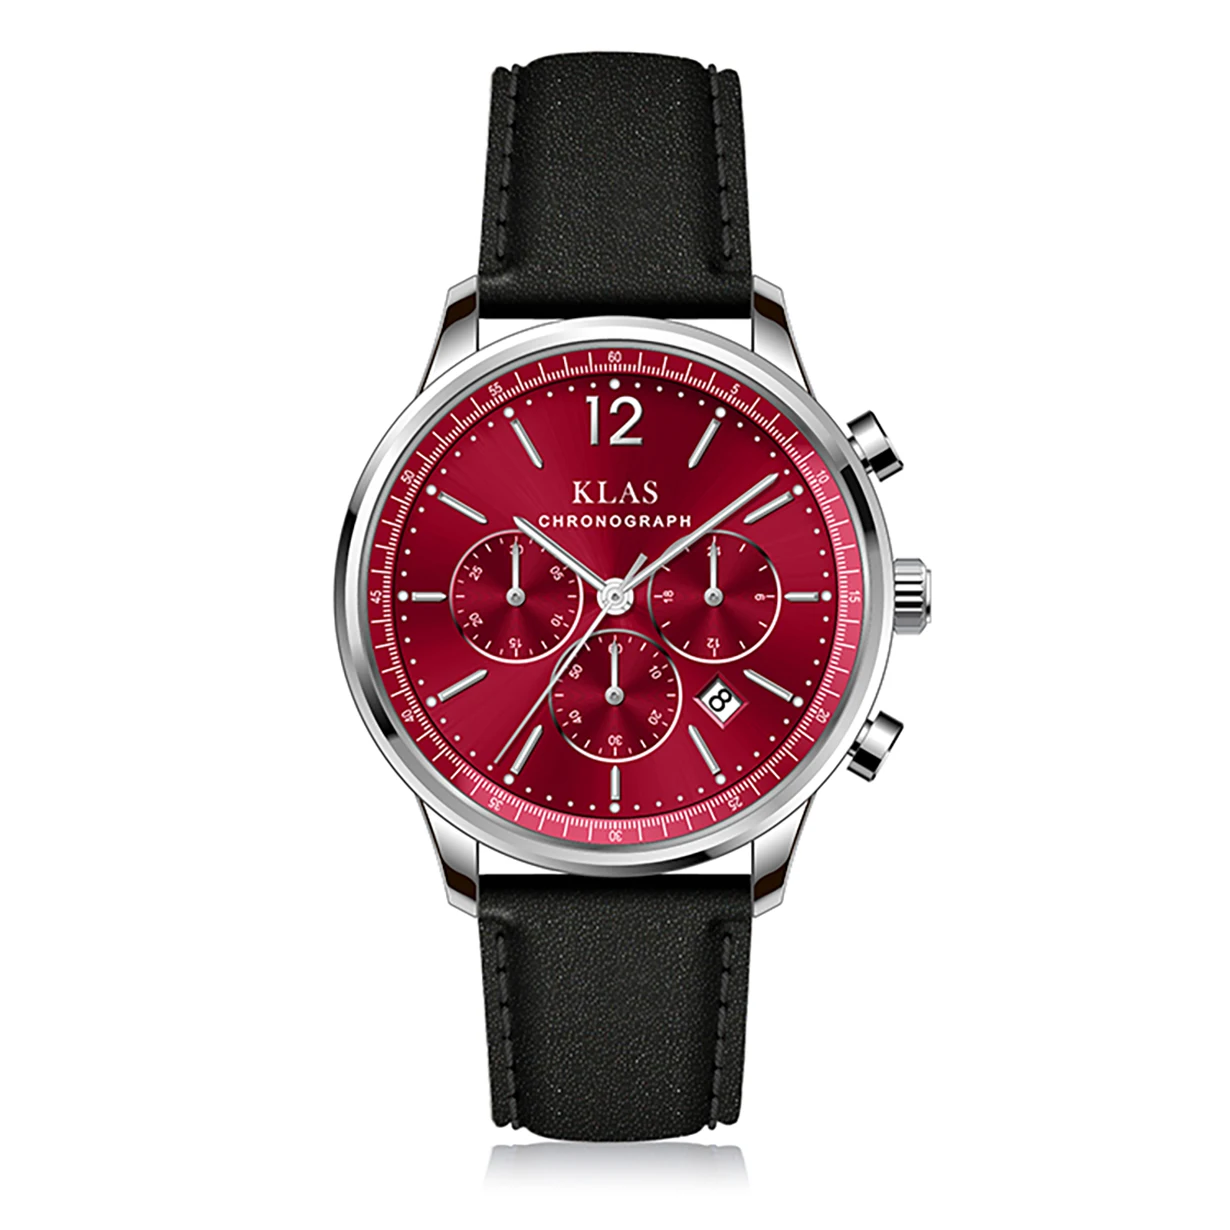 2021 red watch stainless steel band luxury quartz watch business men's watch  KLAS